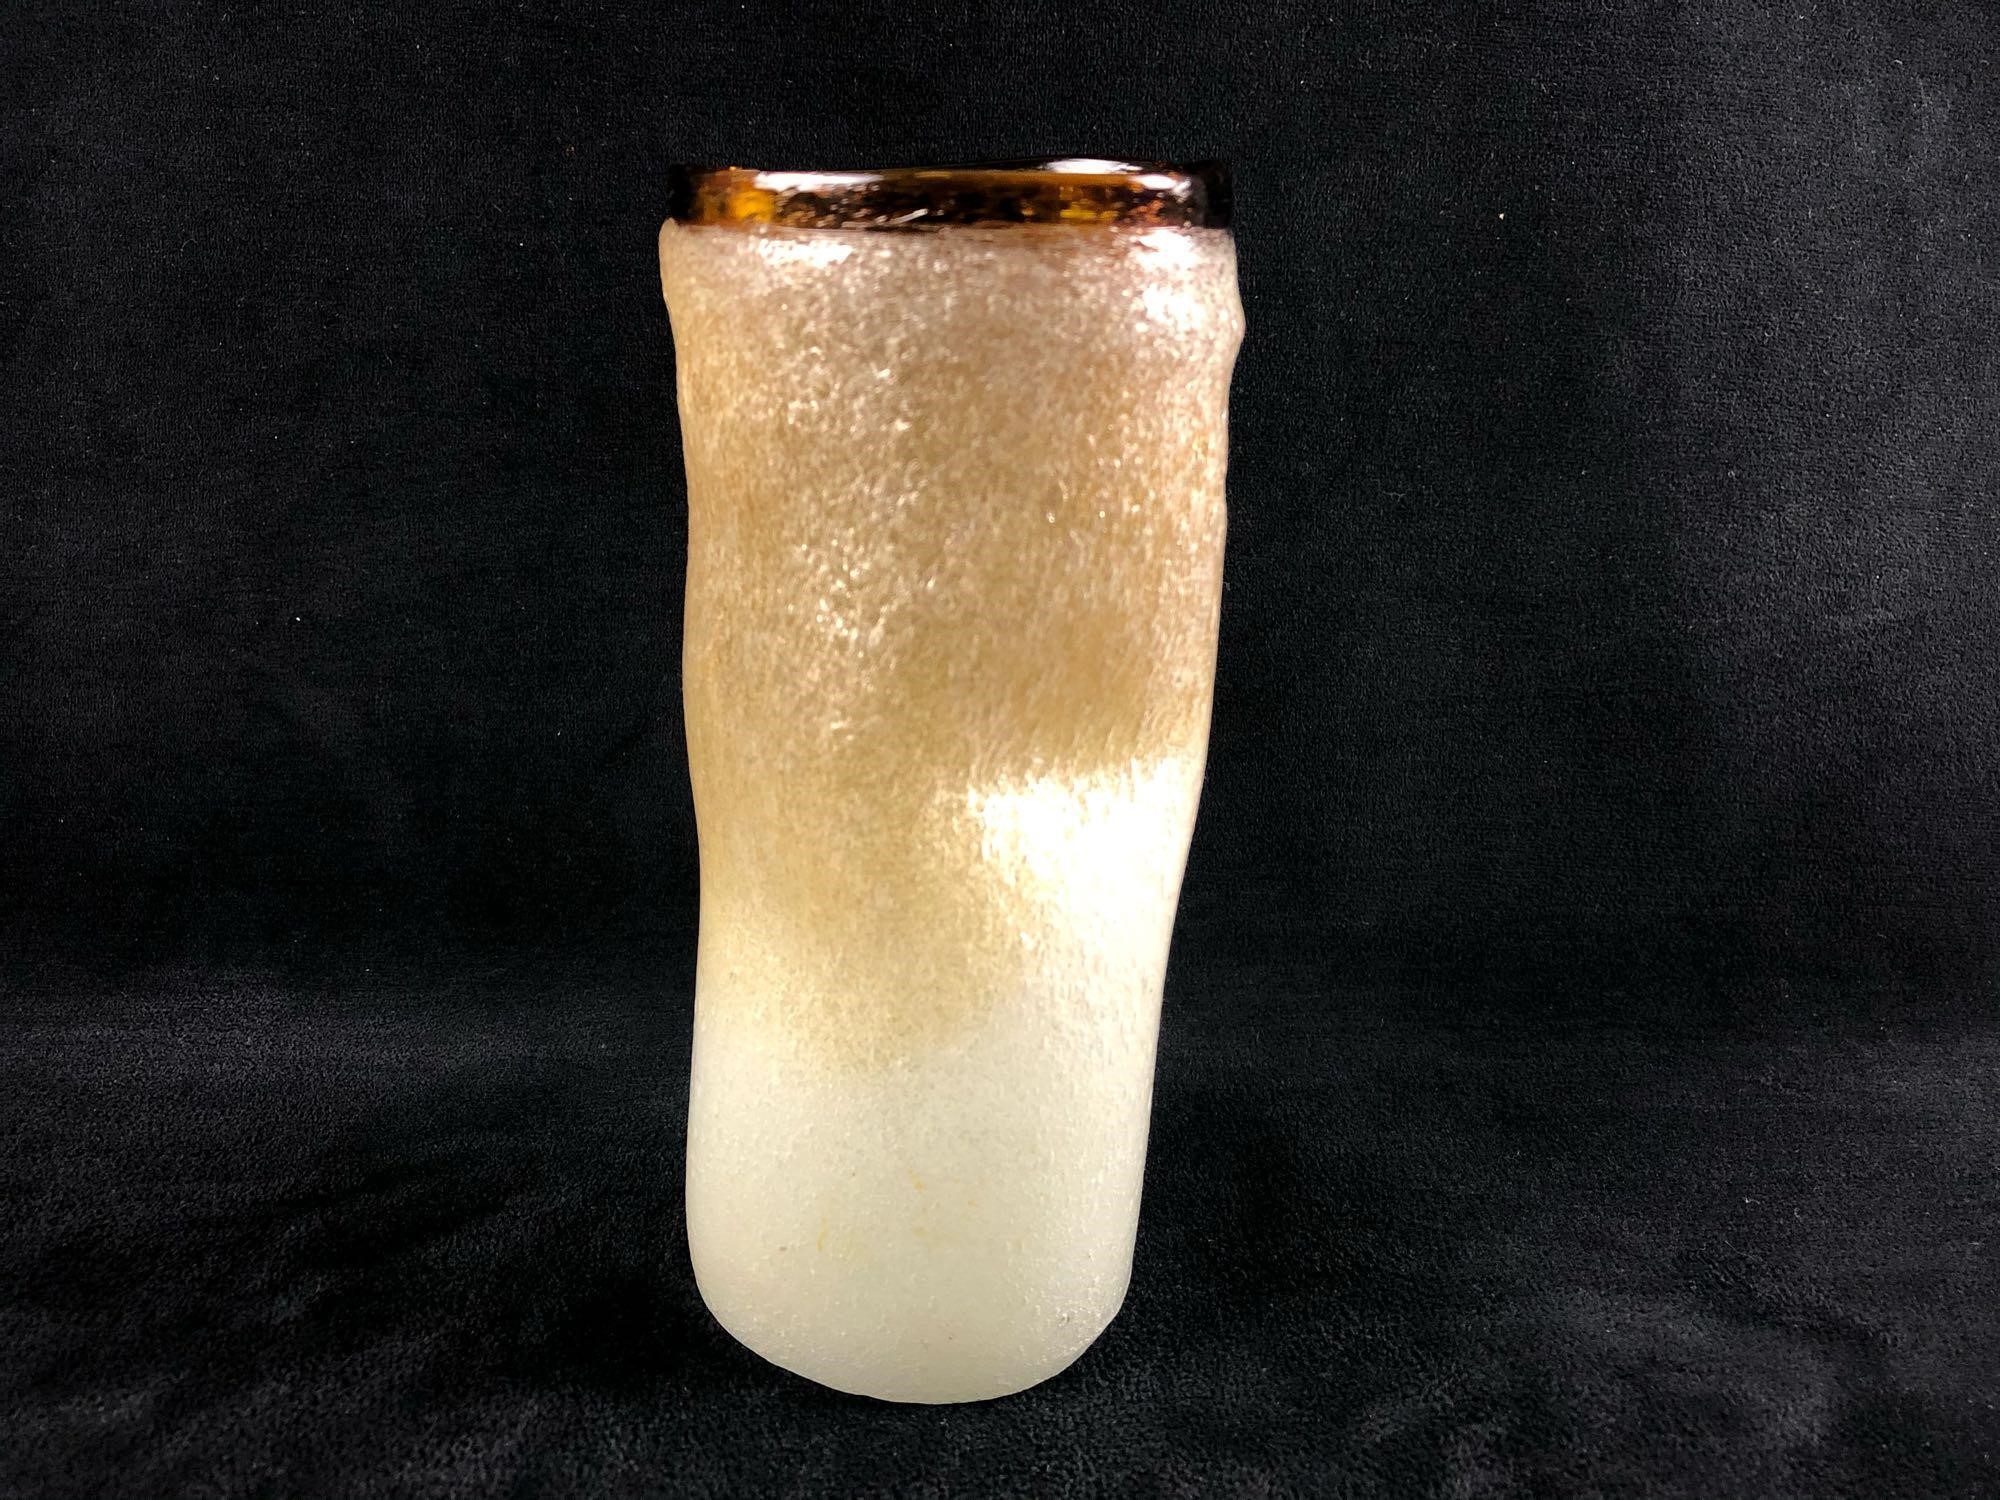 Antique Blenco Hand Blown Pinched Glass Tumble Vas